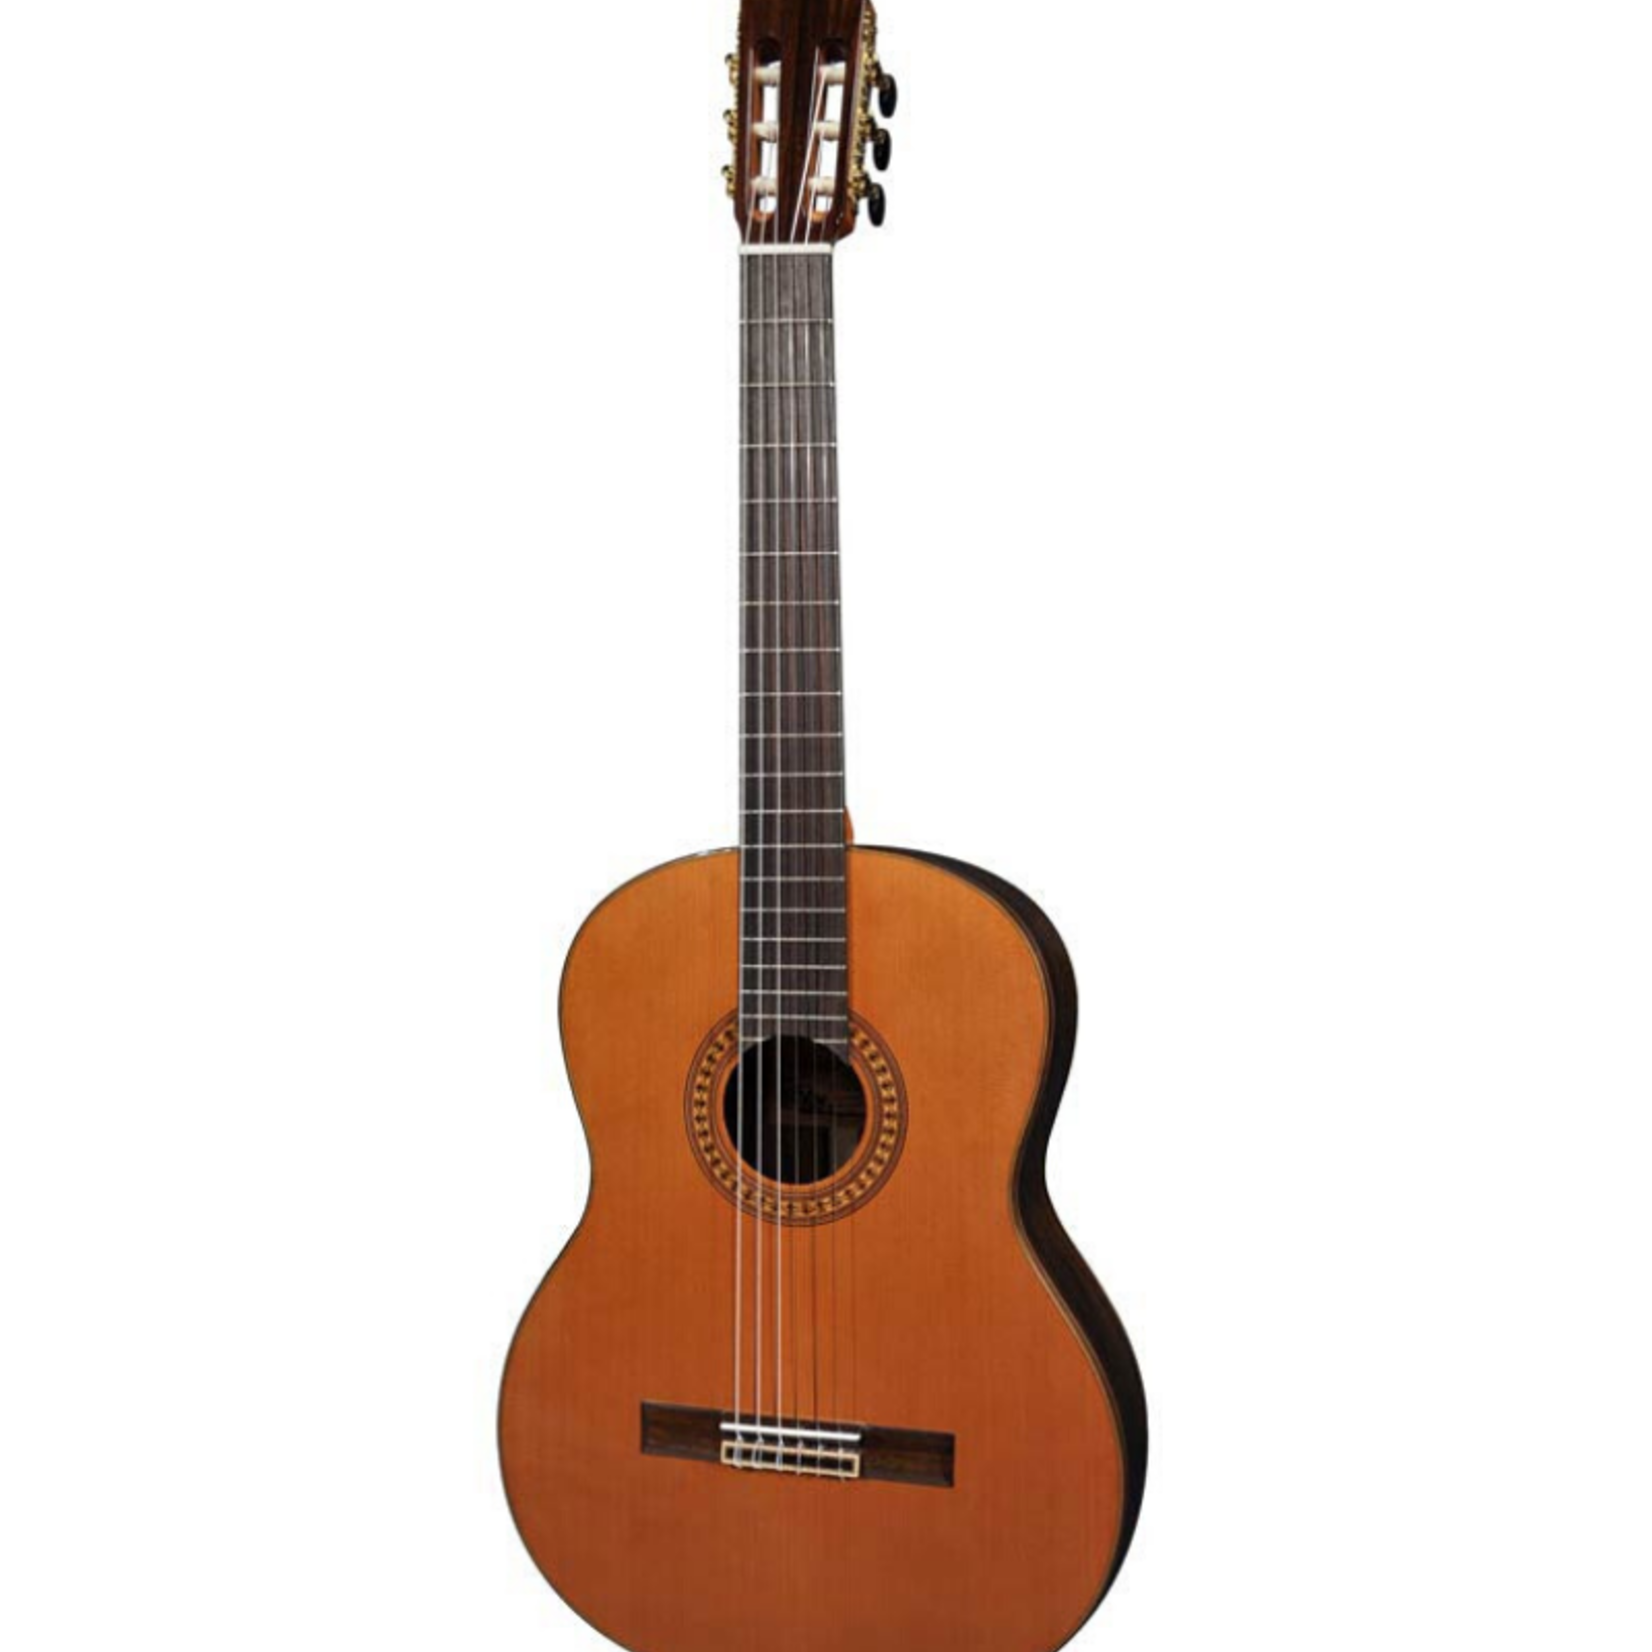 Salvador Cortez SALVADOR CORTEZ CC-60 Solid Top Concert Series guitare classique